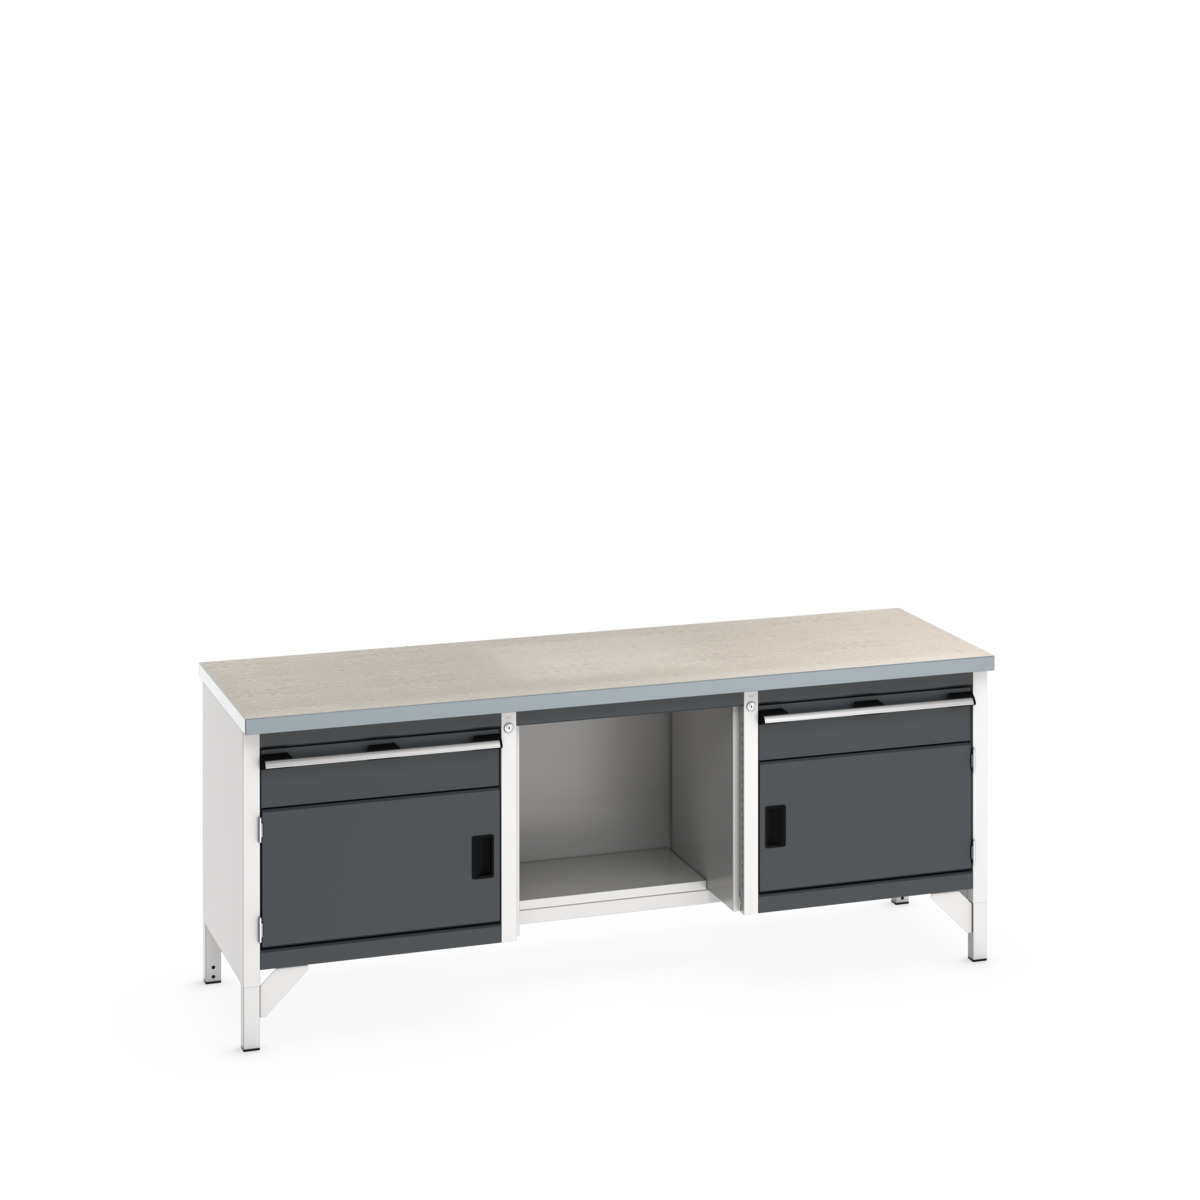 41002069. - cubio storage bench (lino)